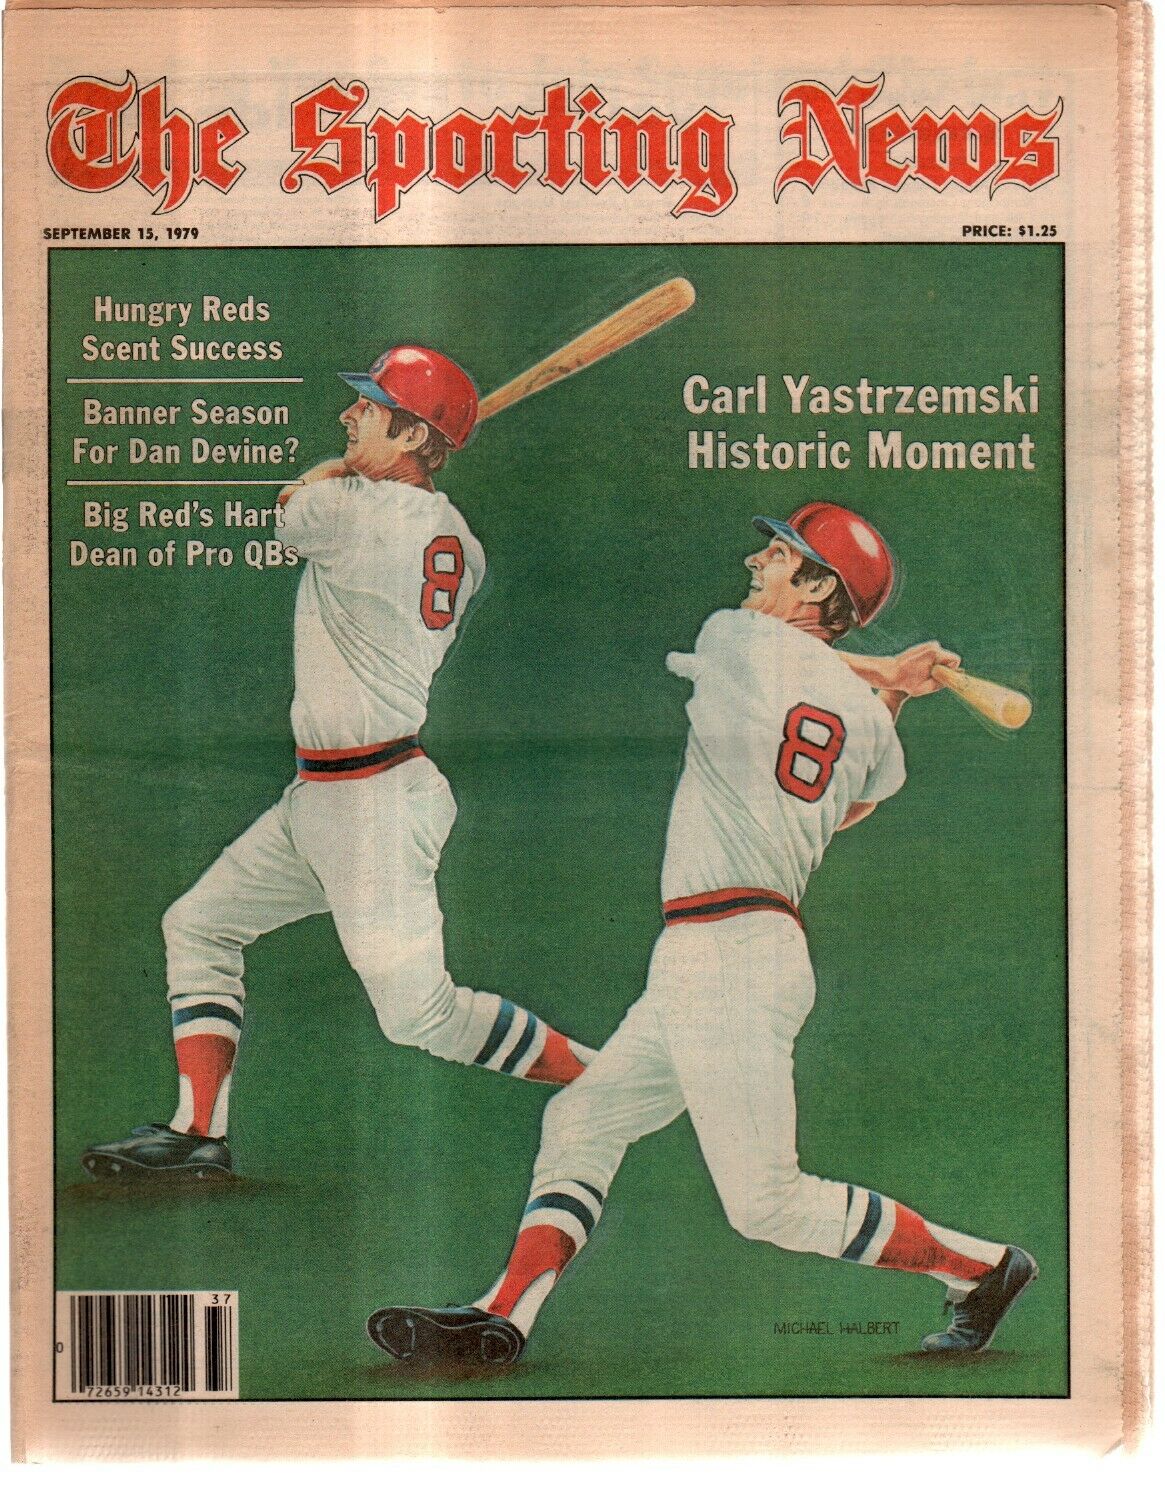 Classic SI Photos of Carl Yastrzemski - Sports Illustrated